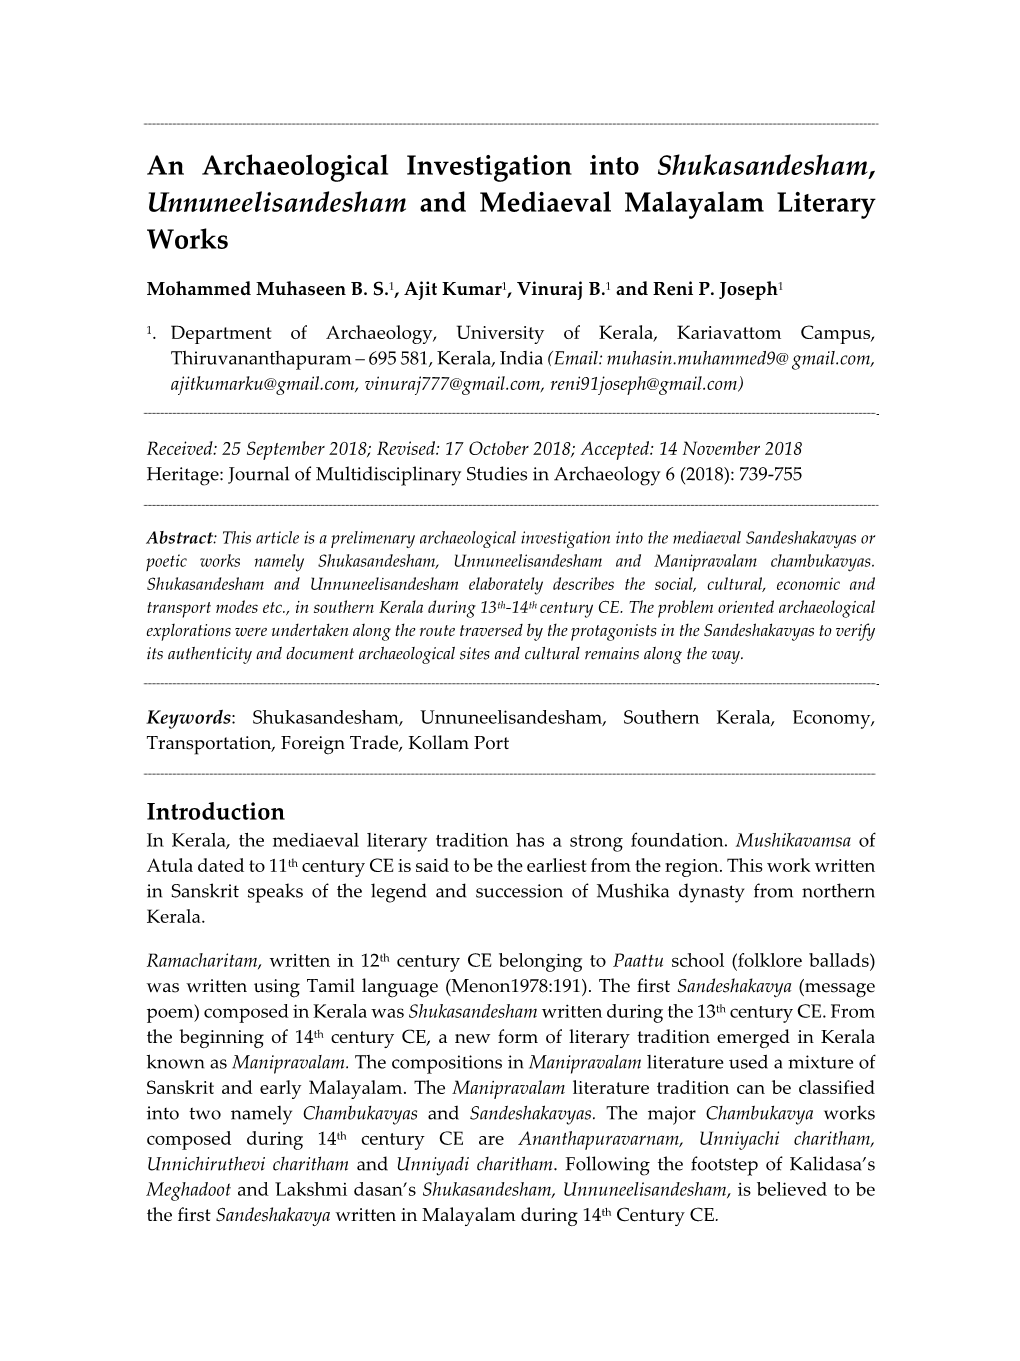 An Archaeological Investigation Into Shukasandesham, Unnuneelisandesham and Mediaeval Malayalam Literary Works